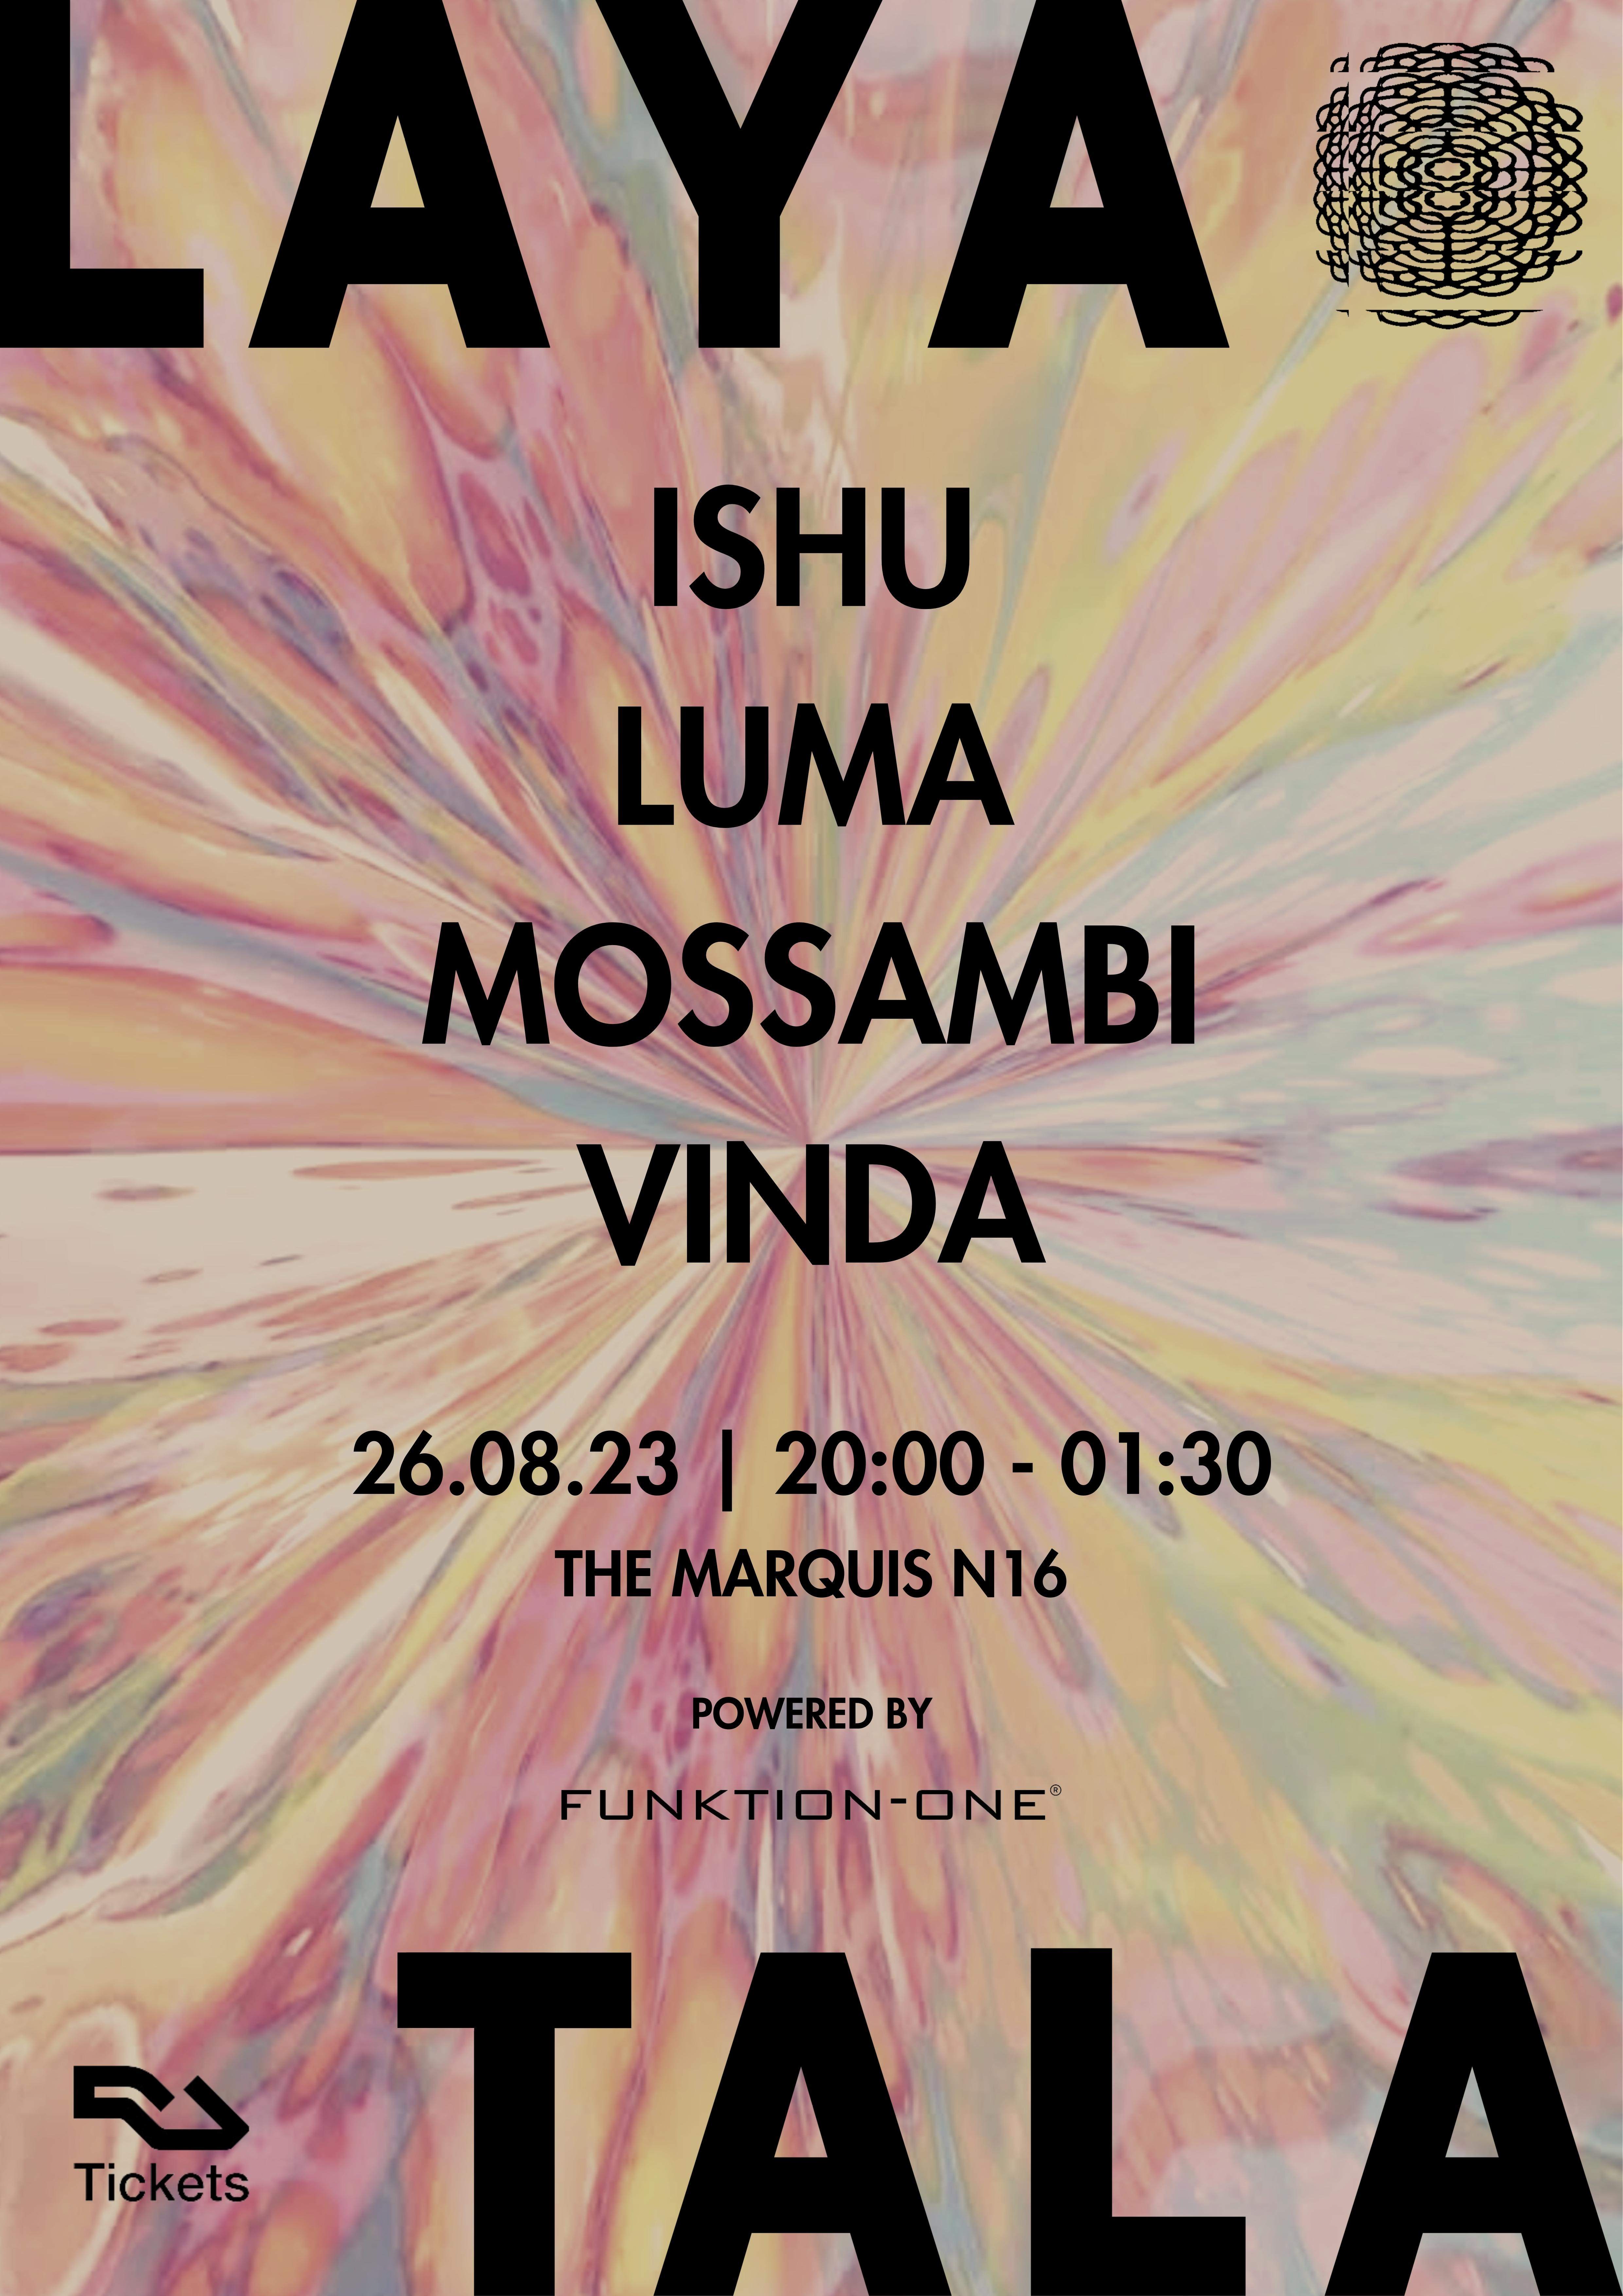 LAYA/TALA Launch Party with LUMA, Mossambi, ISHU, Vinda - Página frontal